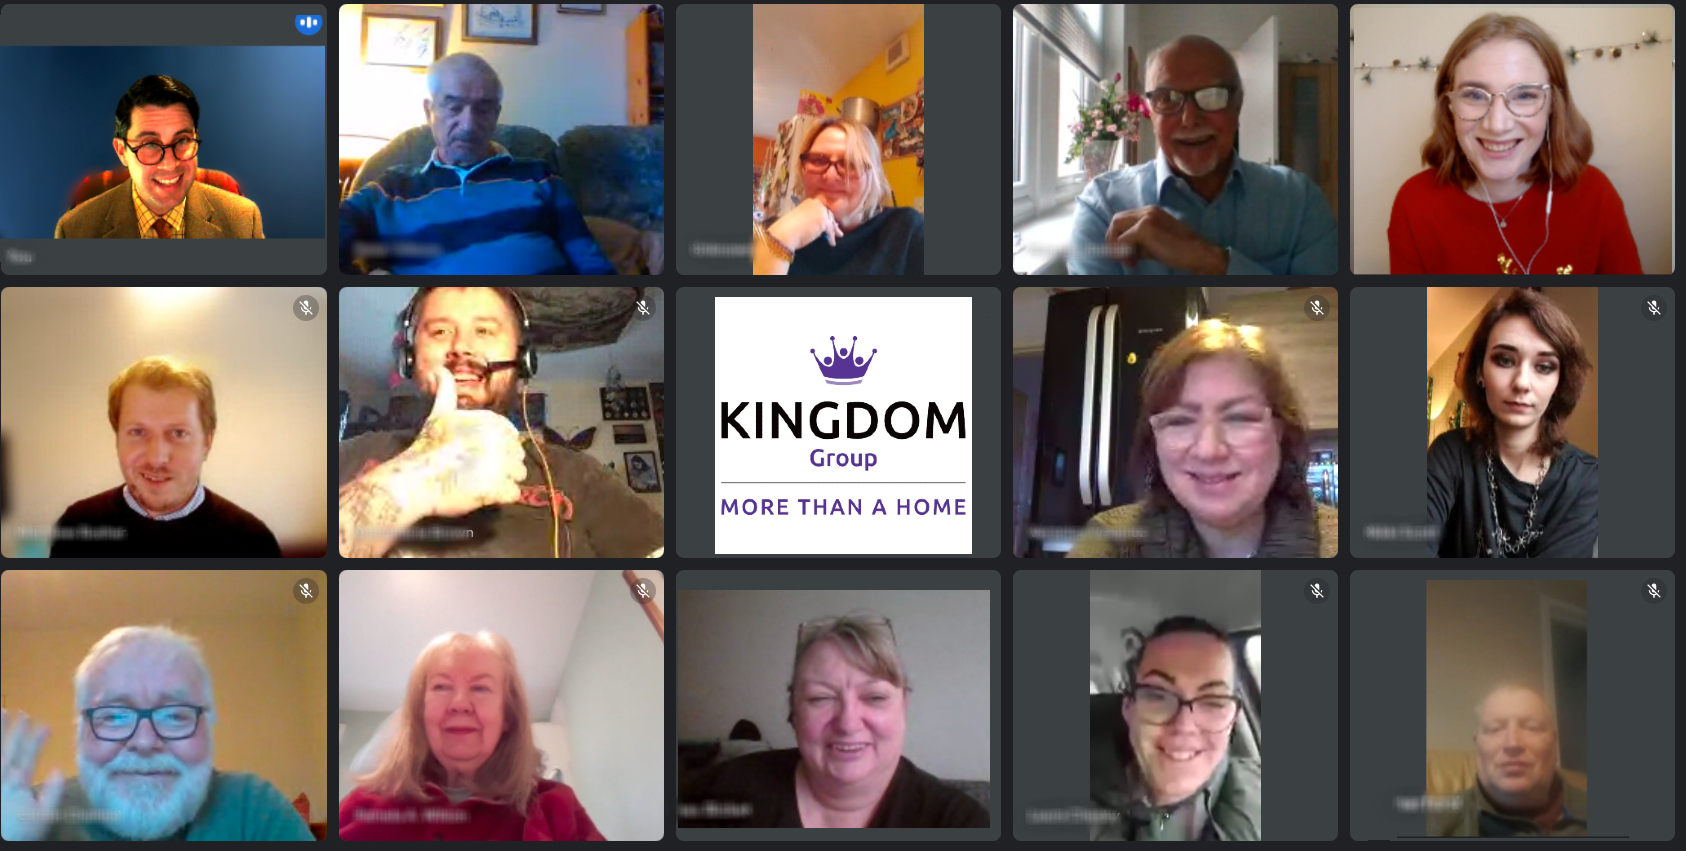 Community Spirit Celebrated At Kingdom’s Winter Gathering